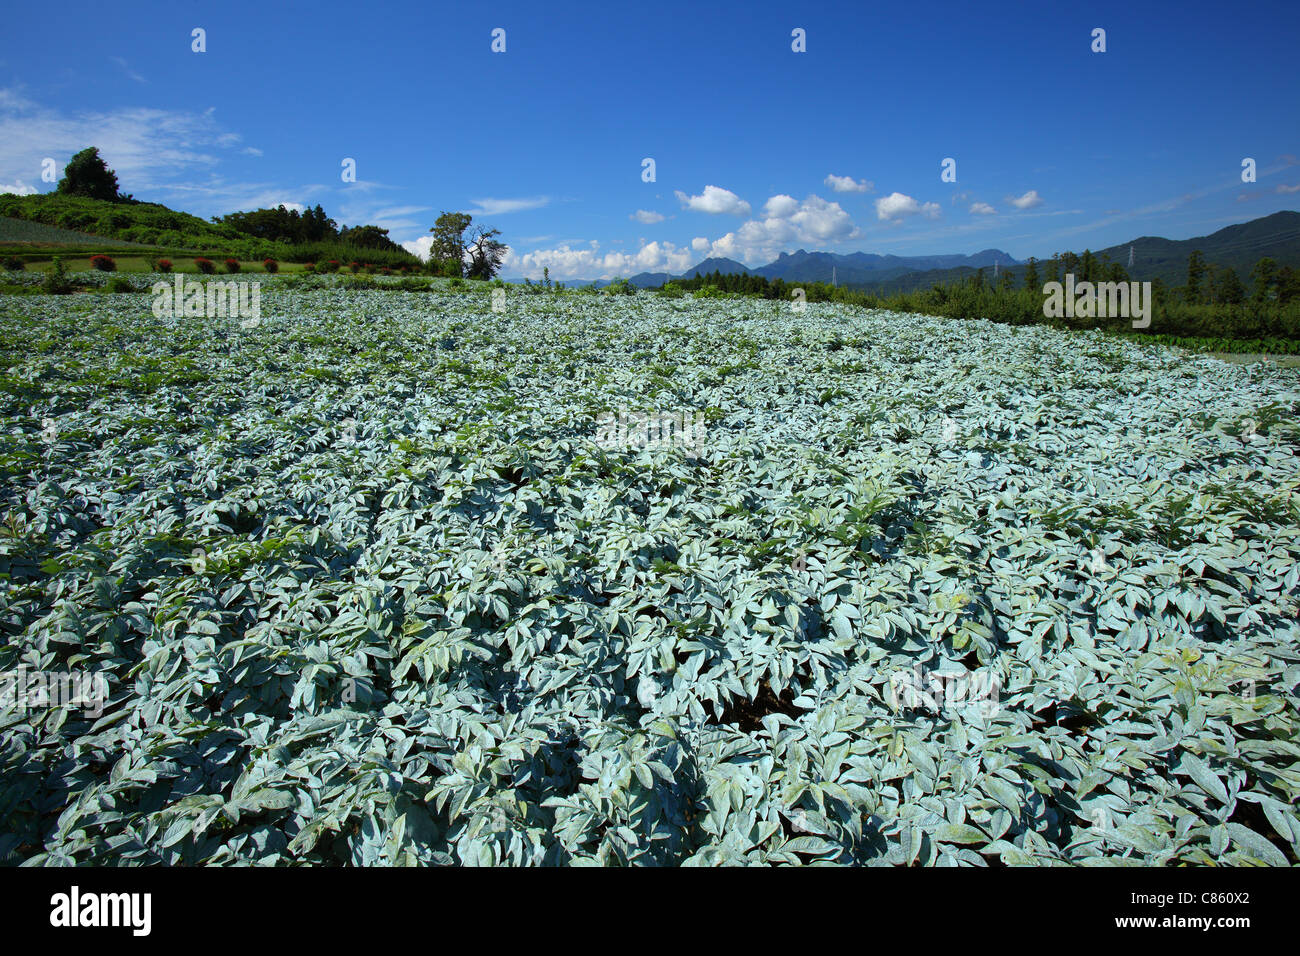 Konjac field and blue sky Stock Photo